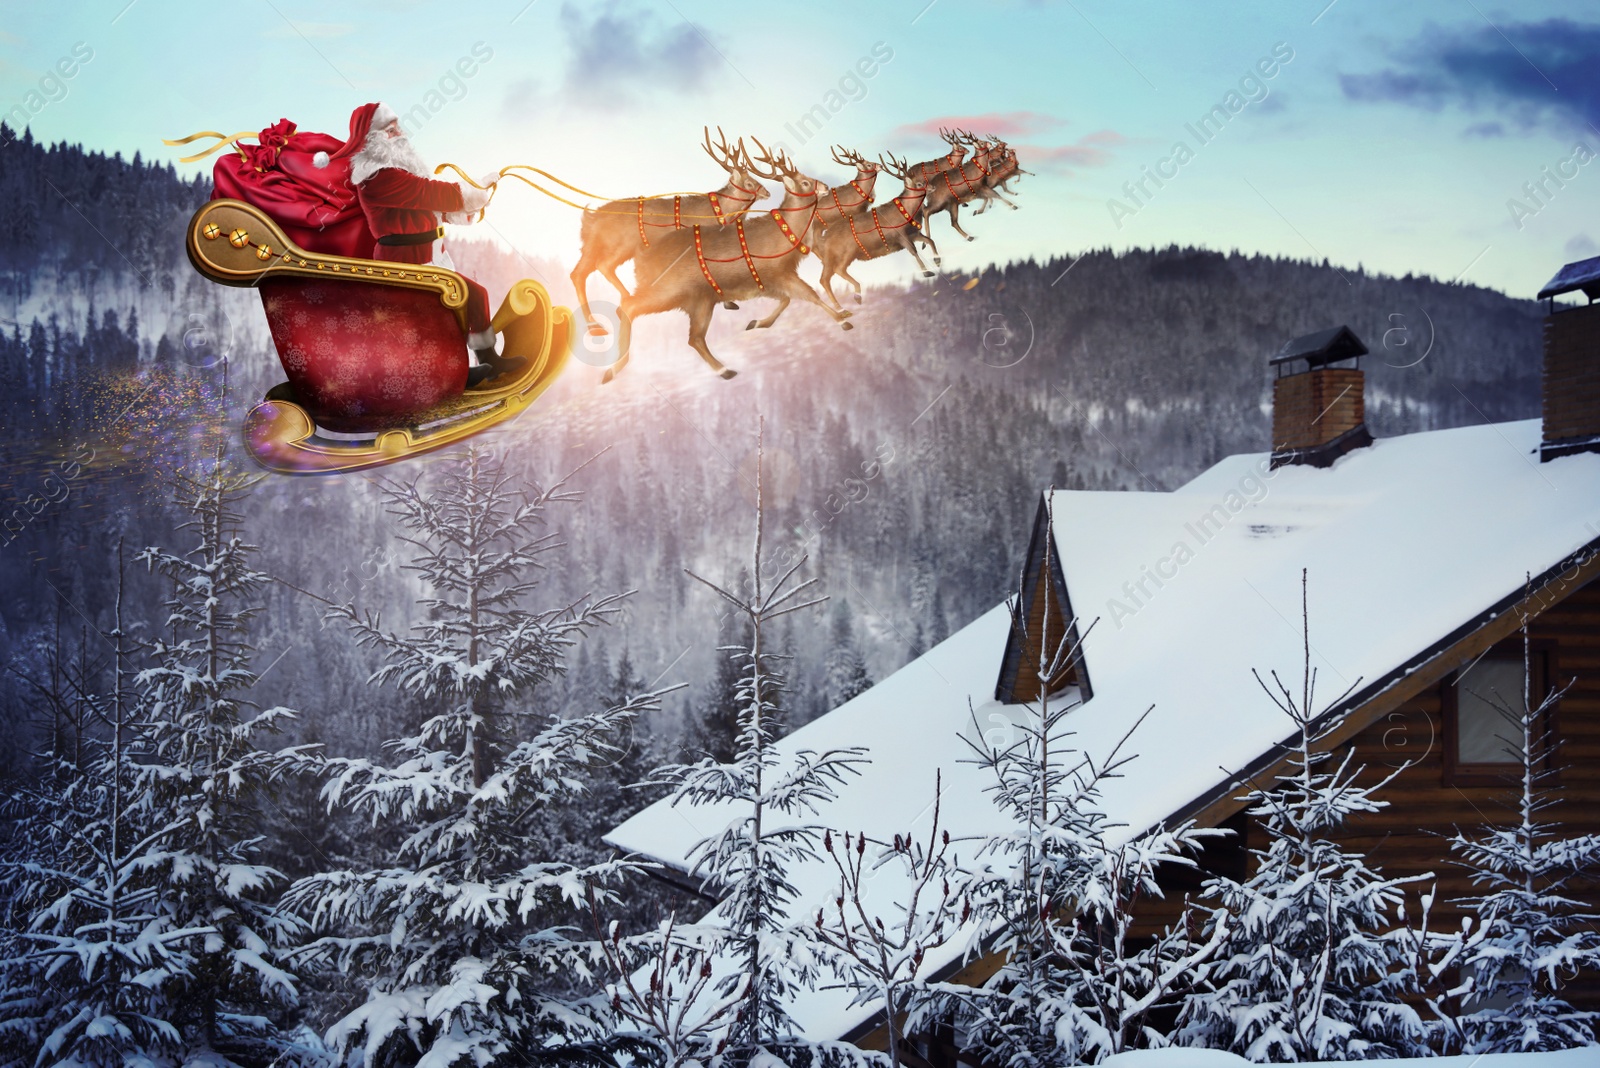 Image of Magic Christmas eve. Santa with reindeers flying in sky